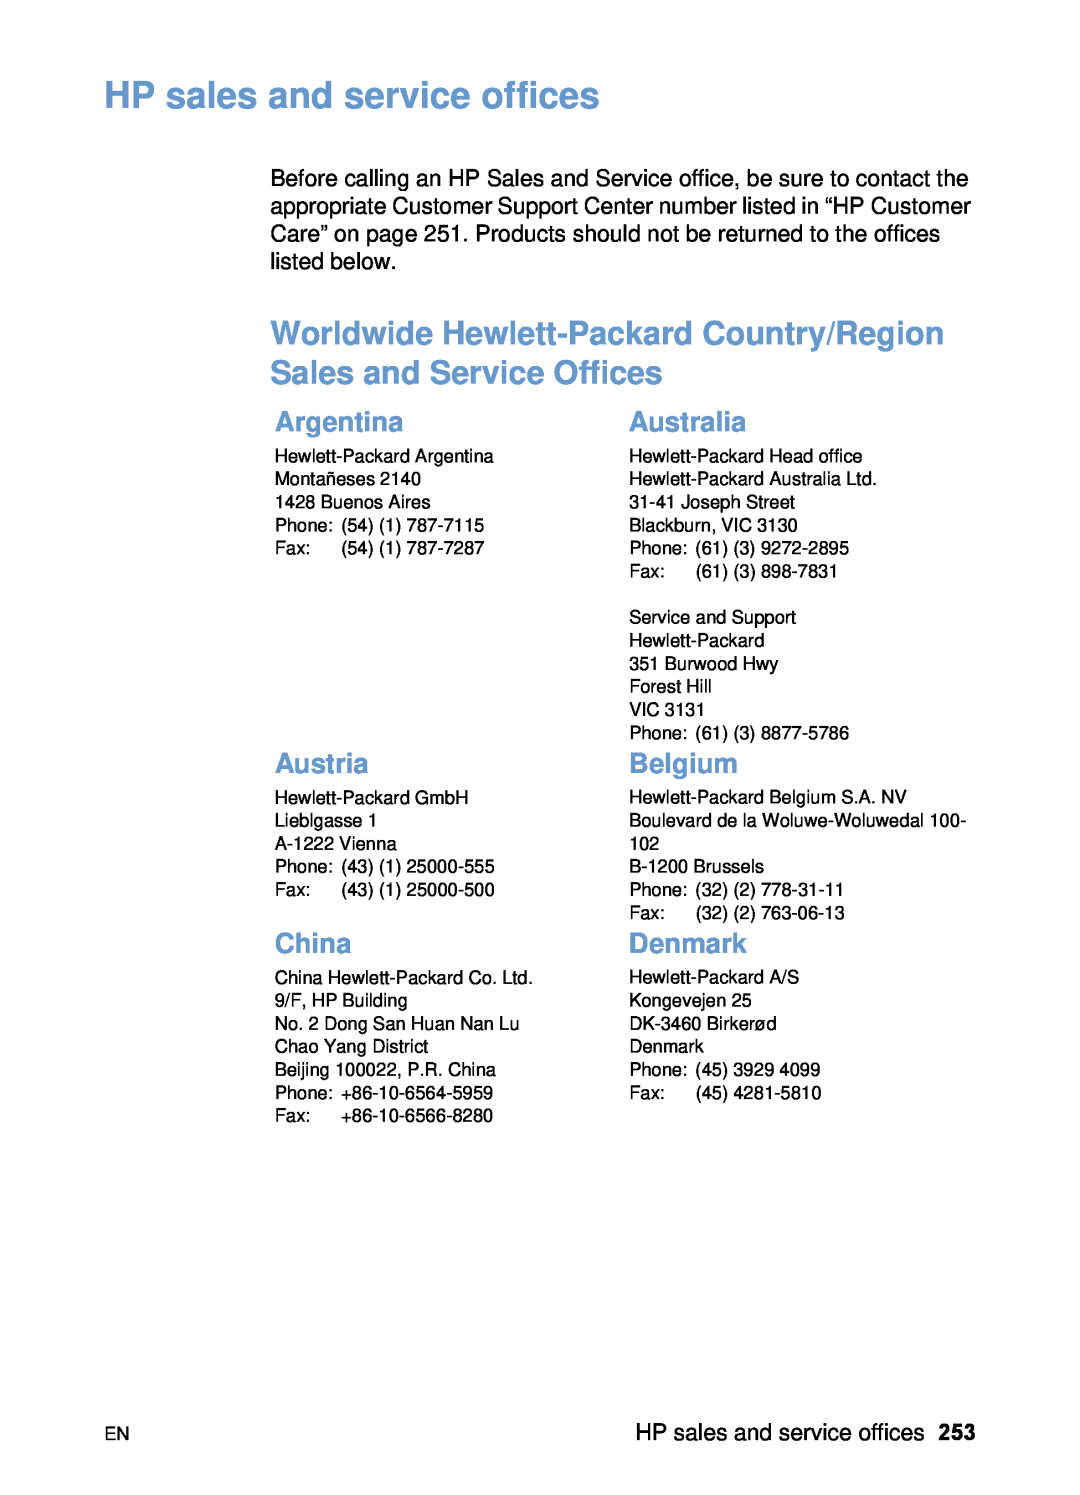 HP 3200 manual Argentina, Australia, AustriaBelgium, China, Denmark, HP sales and service offices 